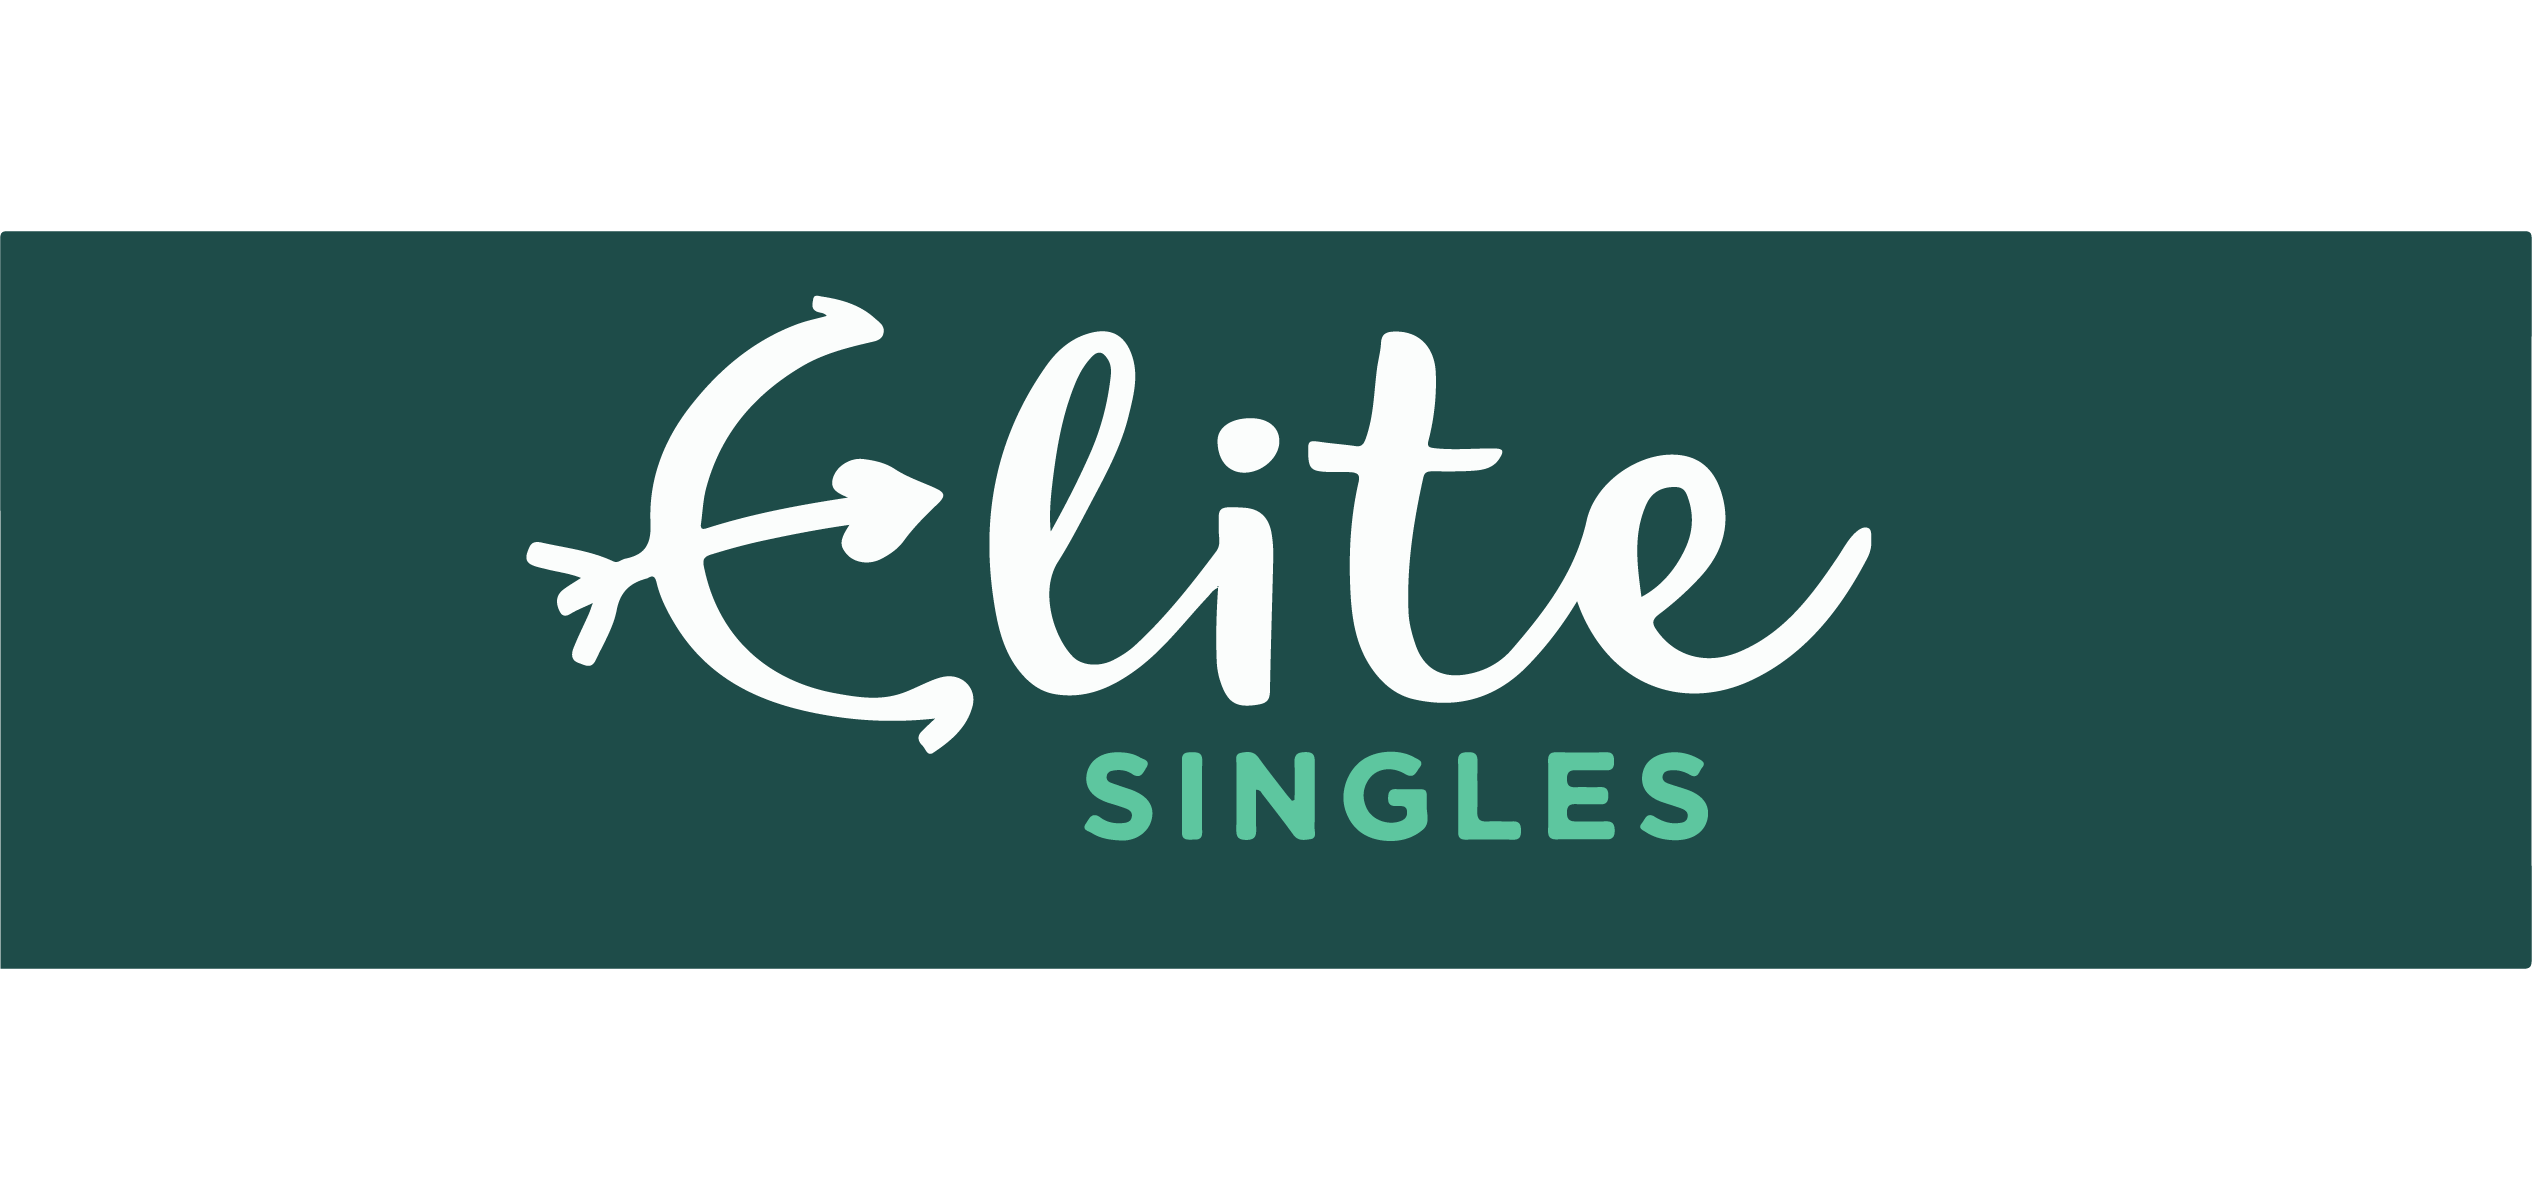 Elite Singles logo